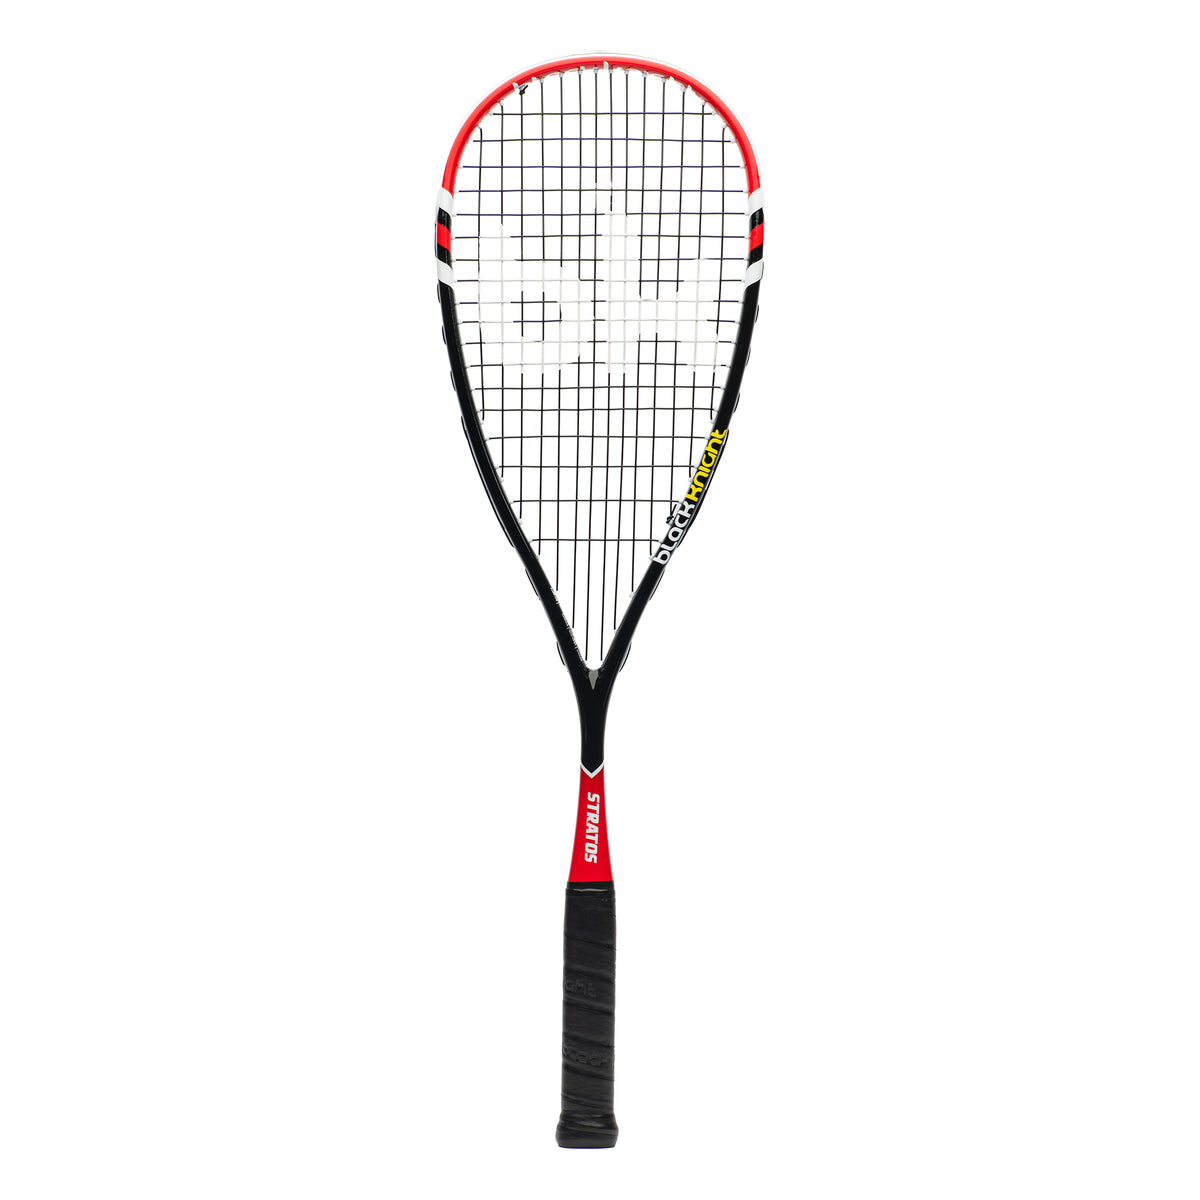 NEW - Black Knight Stratos 23 Squash Racquet, no cover